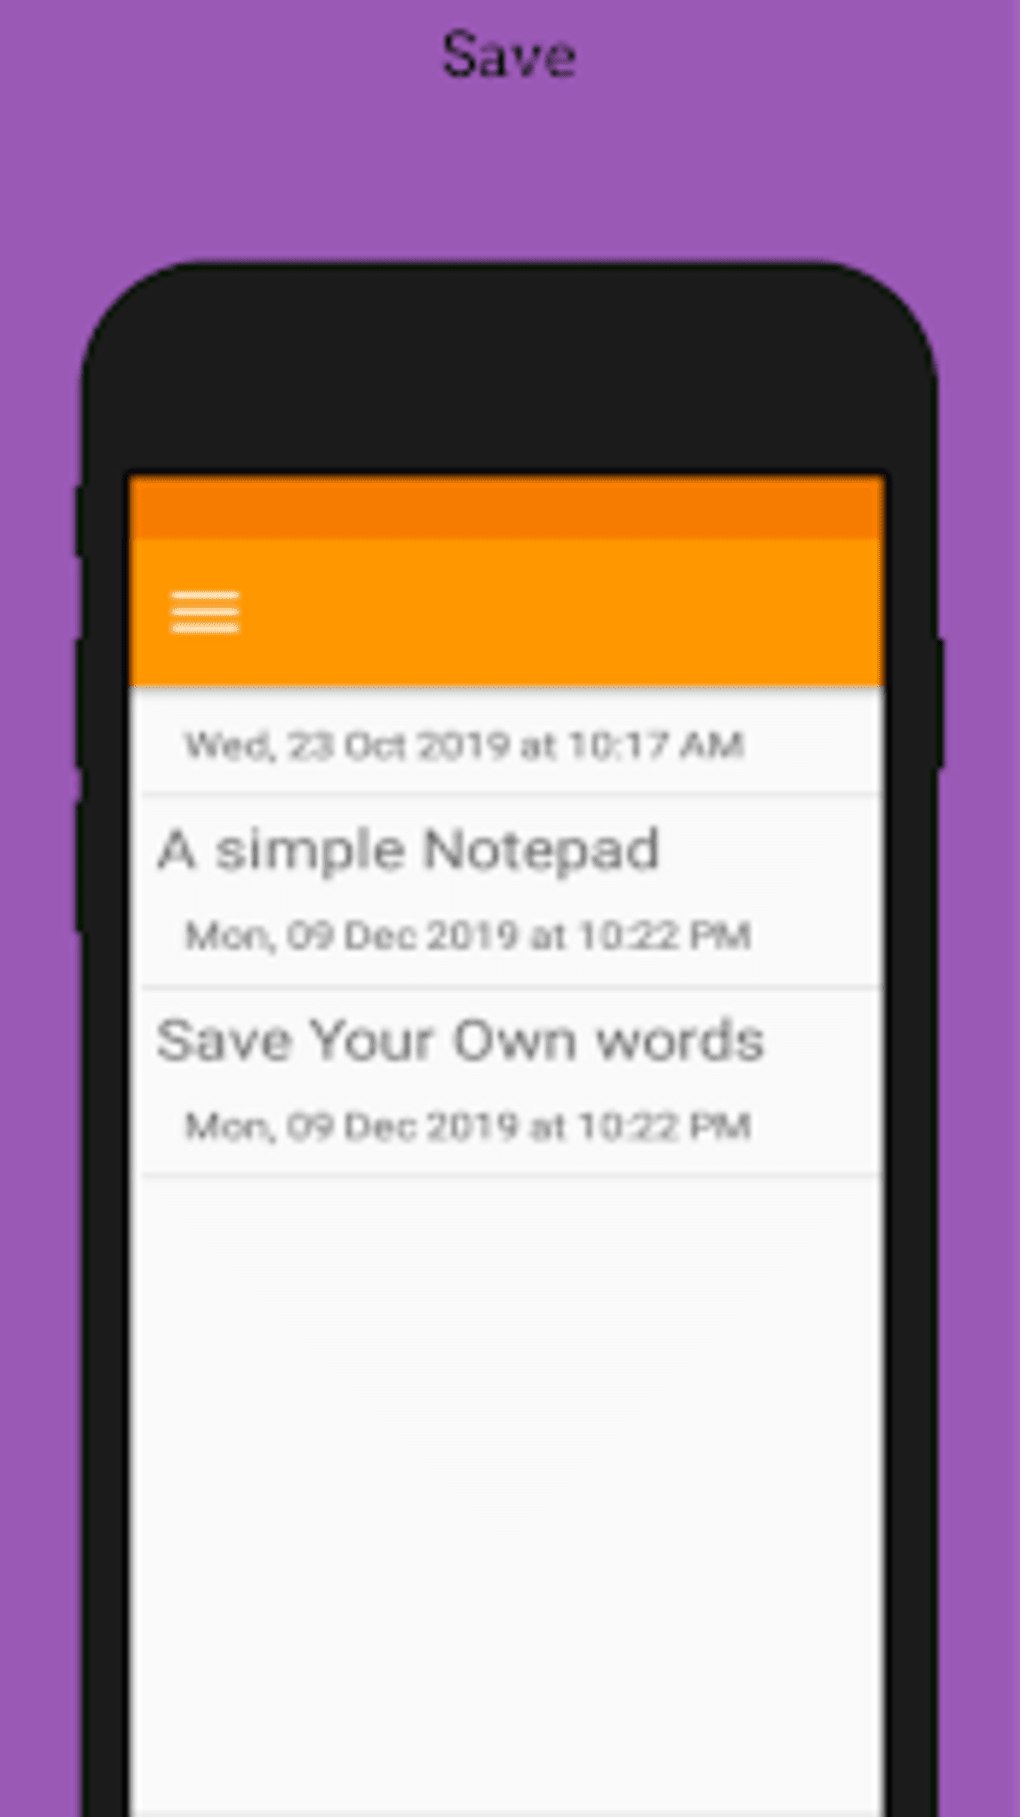 simple notepad app not saving